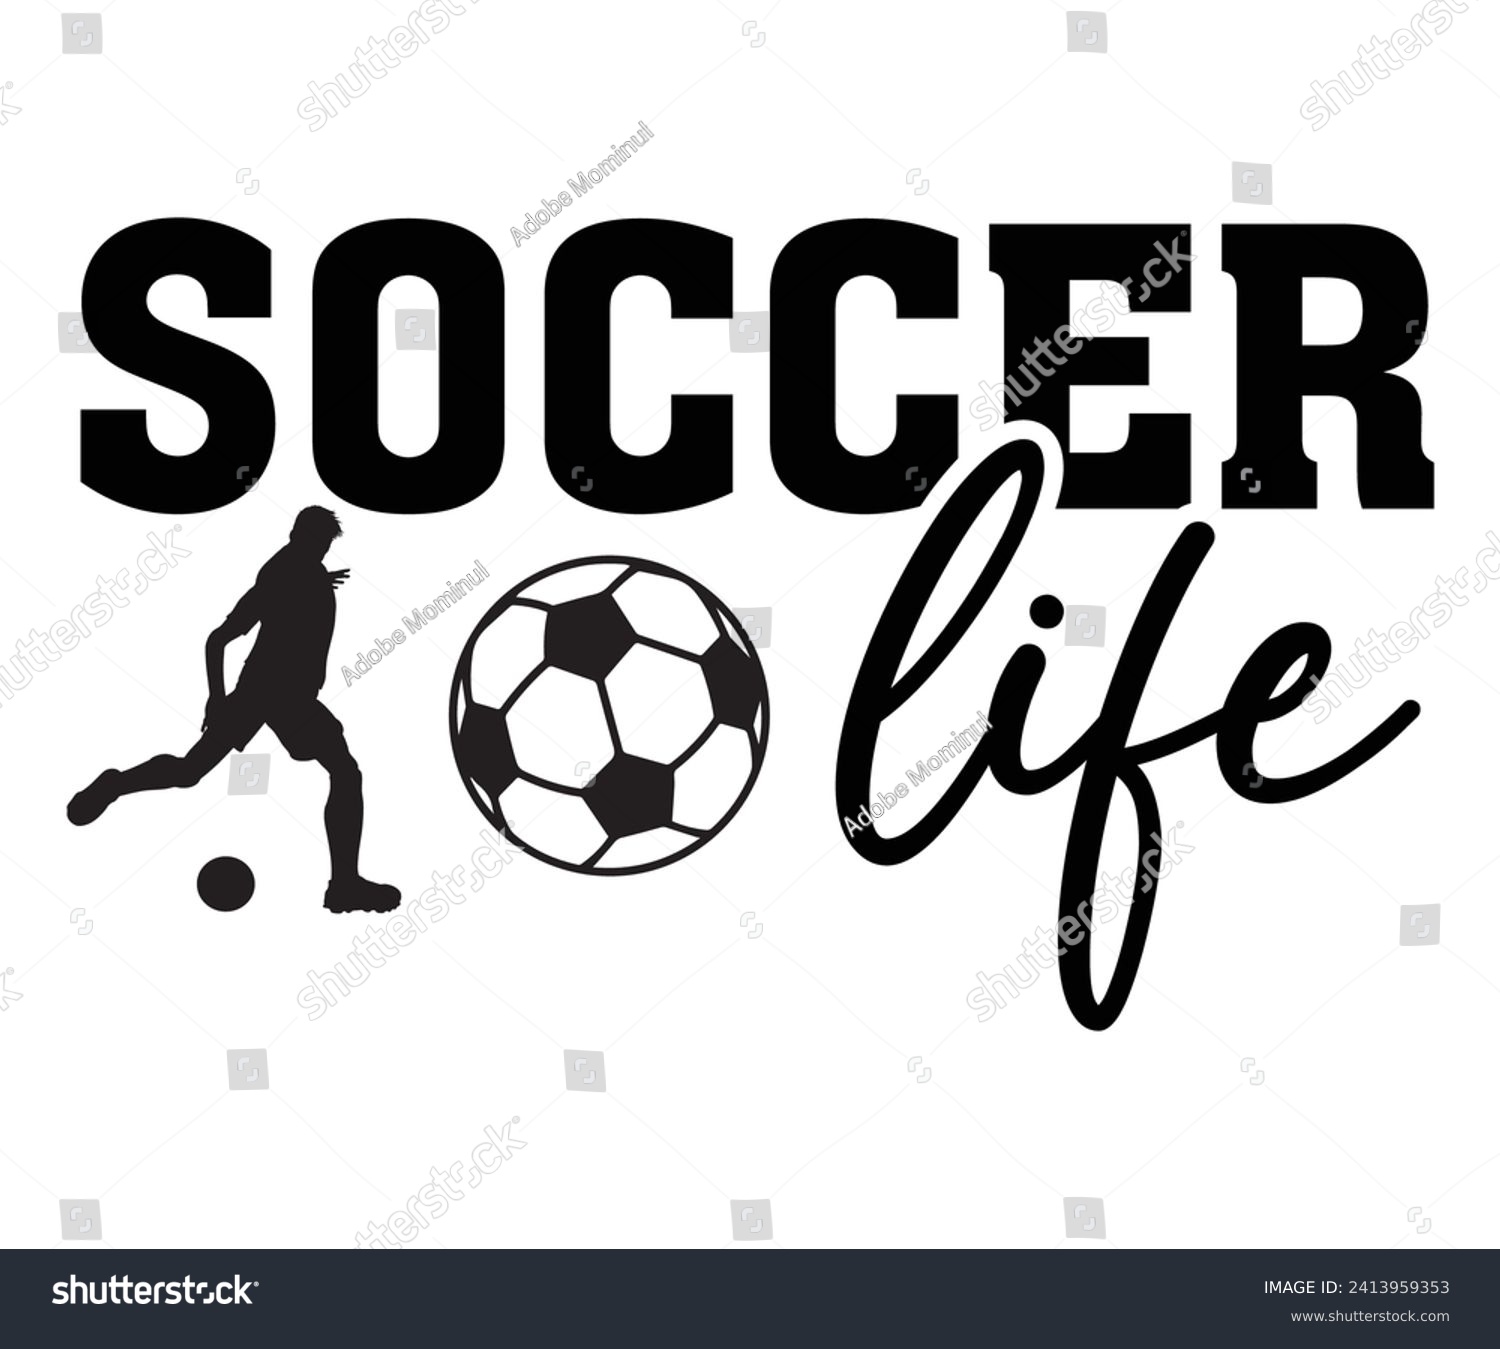 SVG of Soccer Life Svg,Soccer Quote Svg,Retro,Soccer Mom Shirt,Funny Shirt,Soccar Player Shirt,Game Day Shirt,Gift For Soccer,Dad of Soccer,Soccer Mascot,Soccer Football,Sport Design Svg,Groovy Cut File, svg